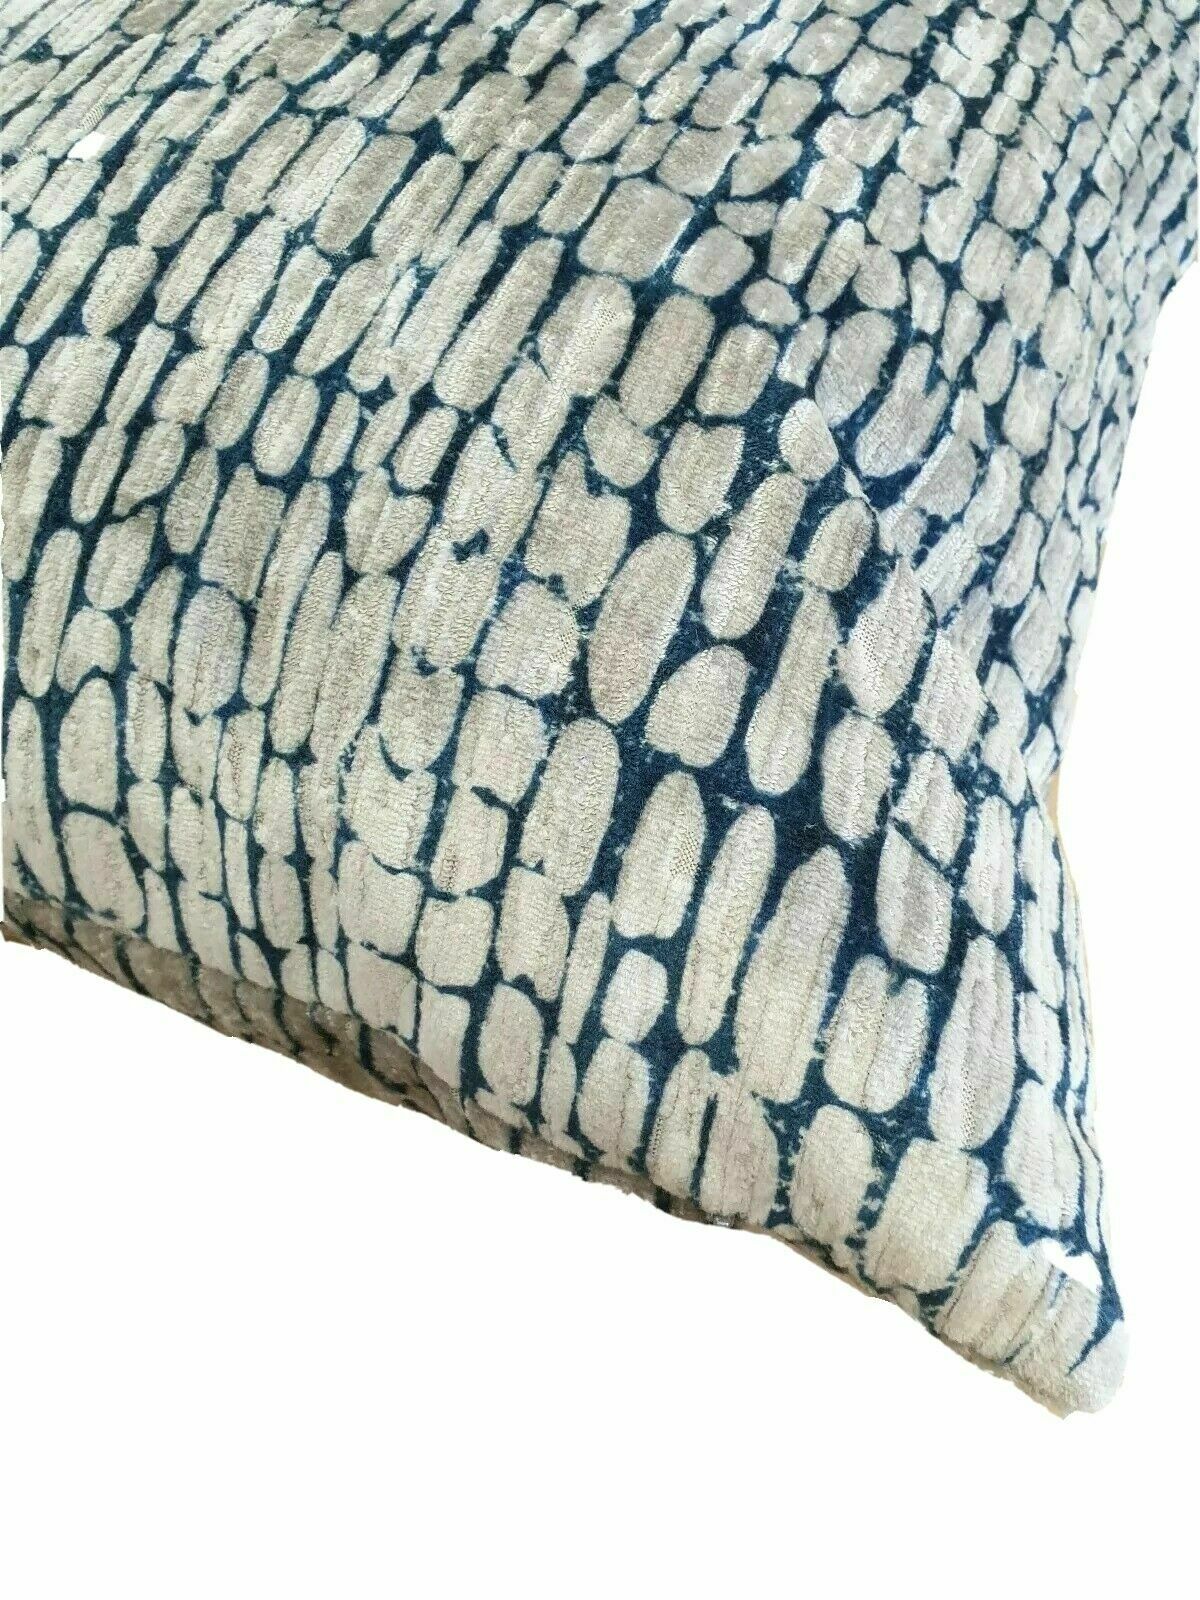 Art Of The Loom Design 1 Azurite 18" / 45cm Cushion Cover